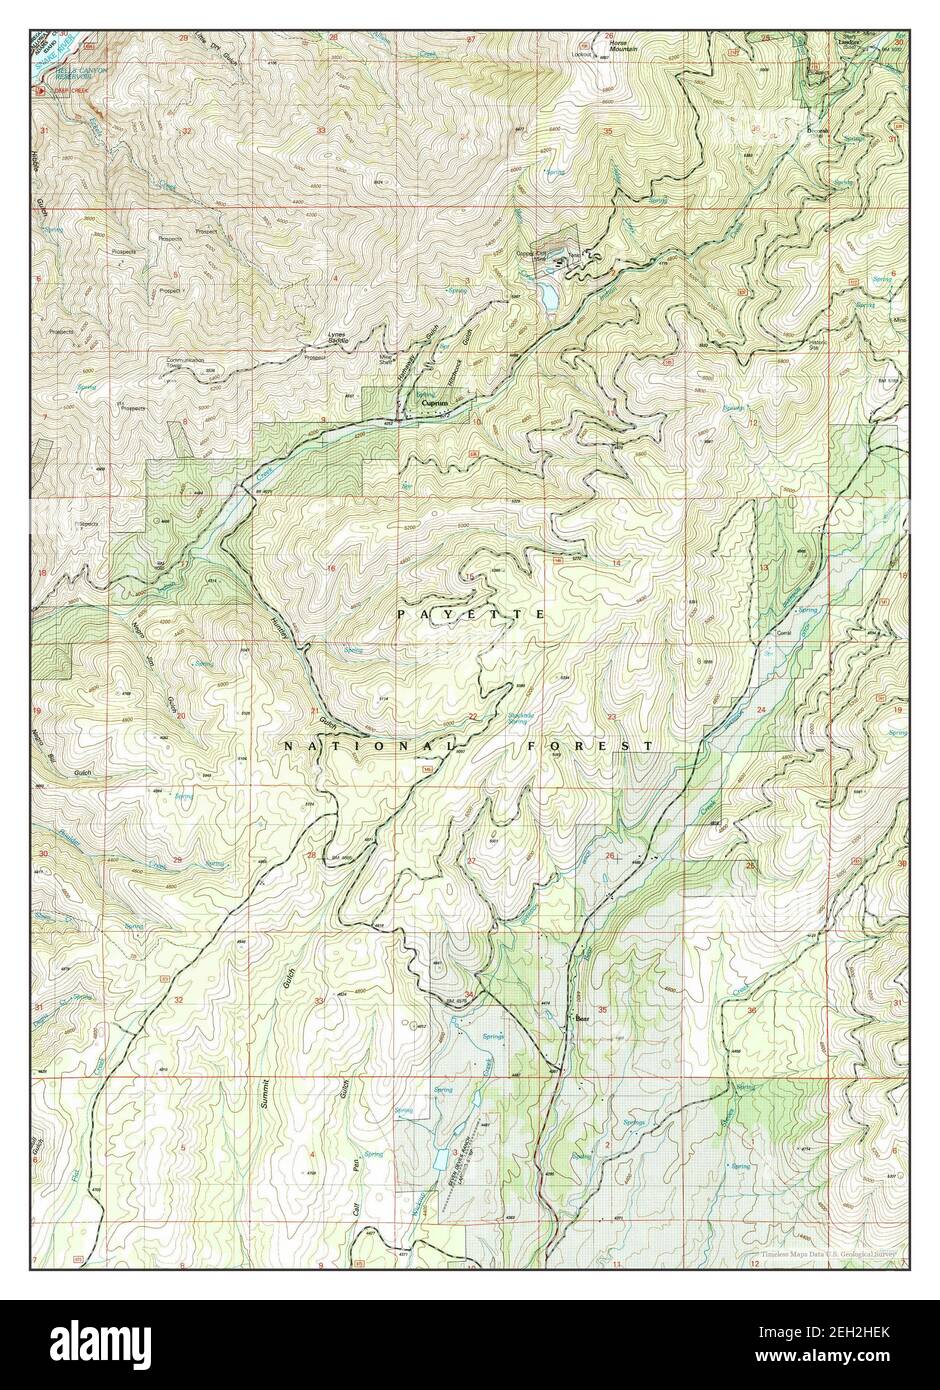 Cuprum, Idaho, map 2004, 1:24000, United States of America by Timeless Maps, data U.S. Geological Survey Stock Photo